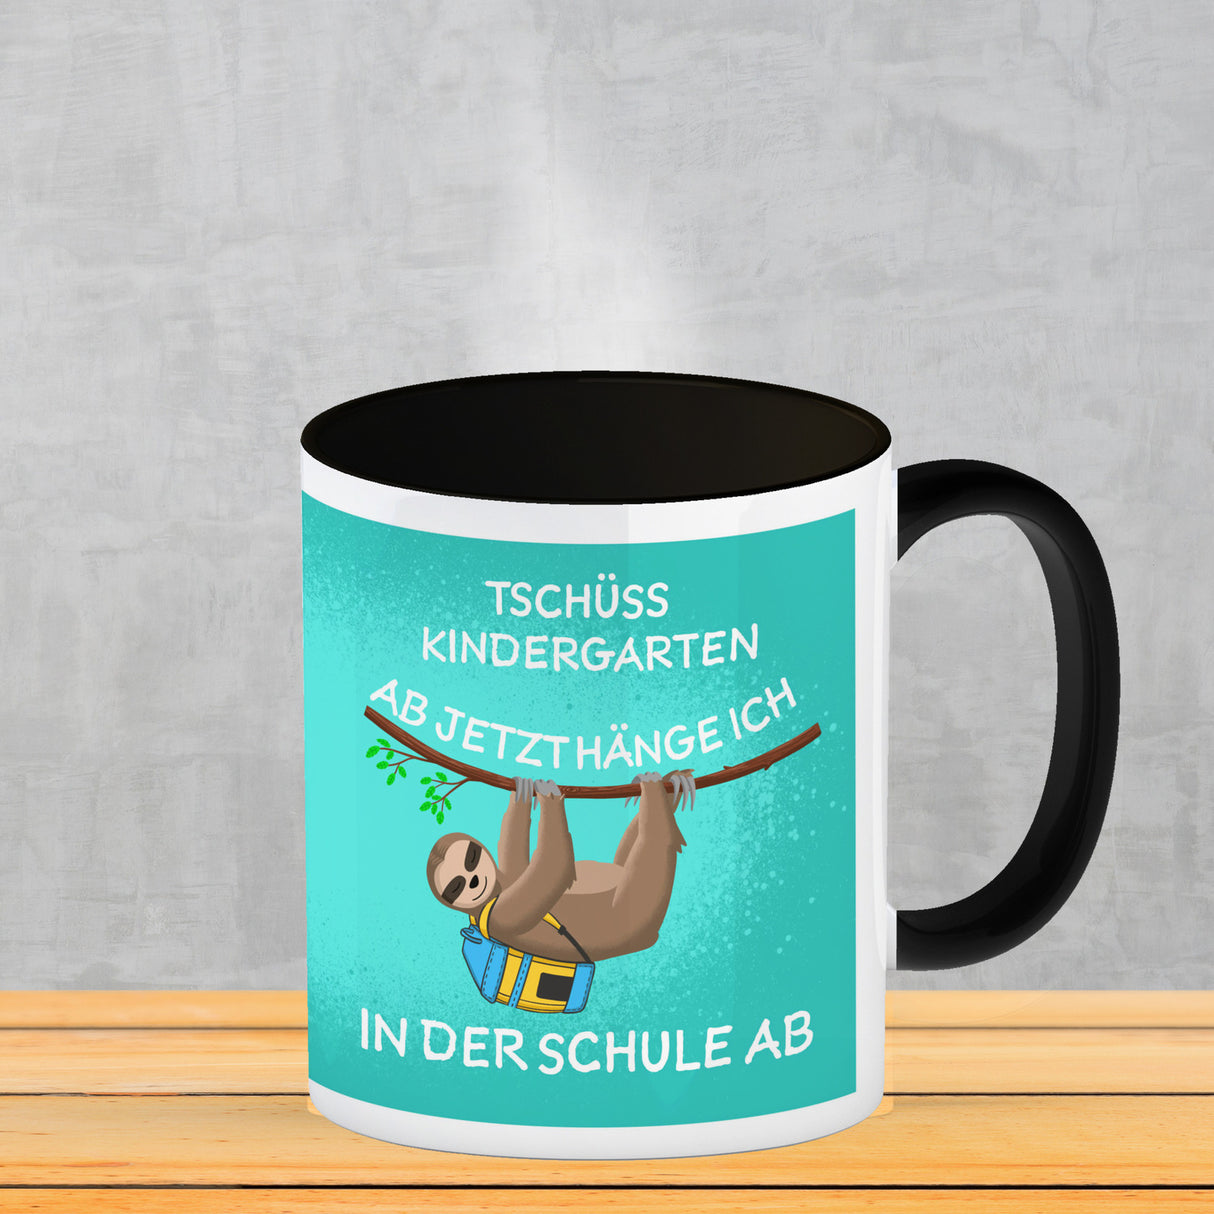 Tschüss Kindergarten... Faultier Kaffeebecher für die Einschulung